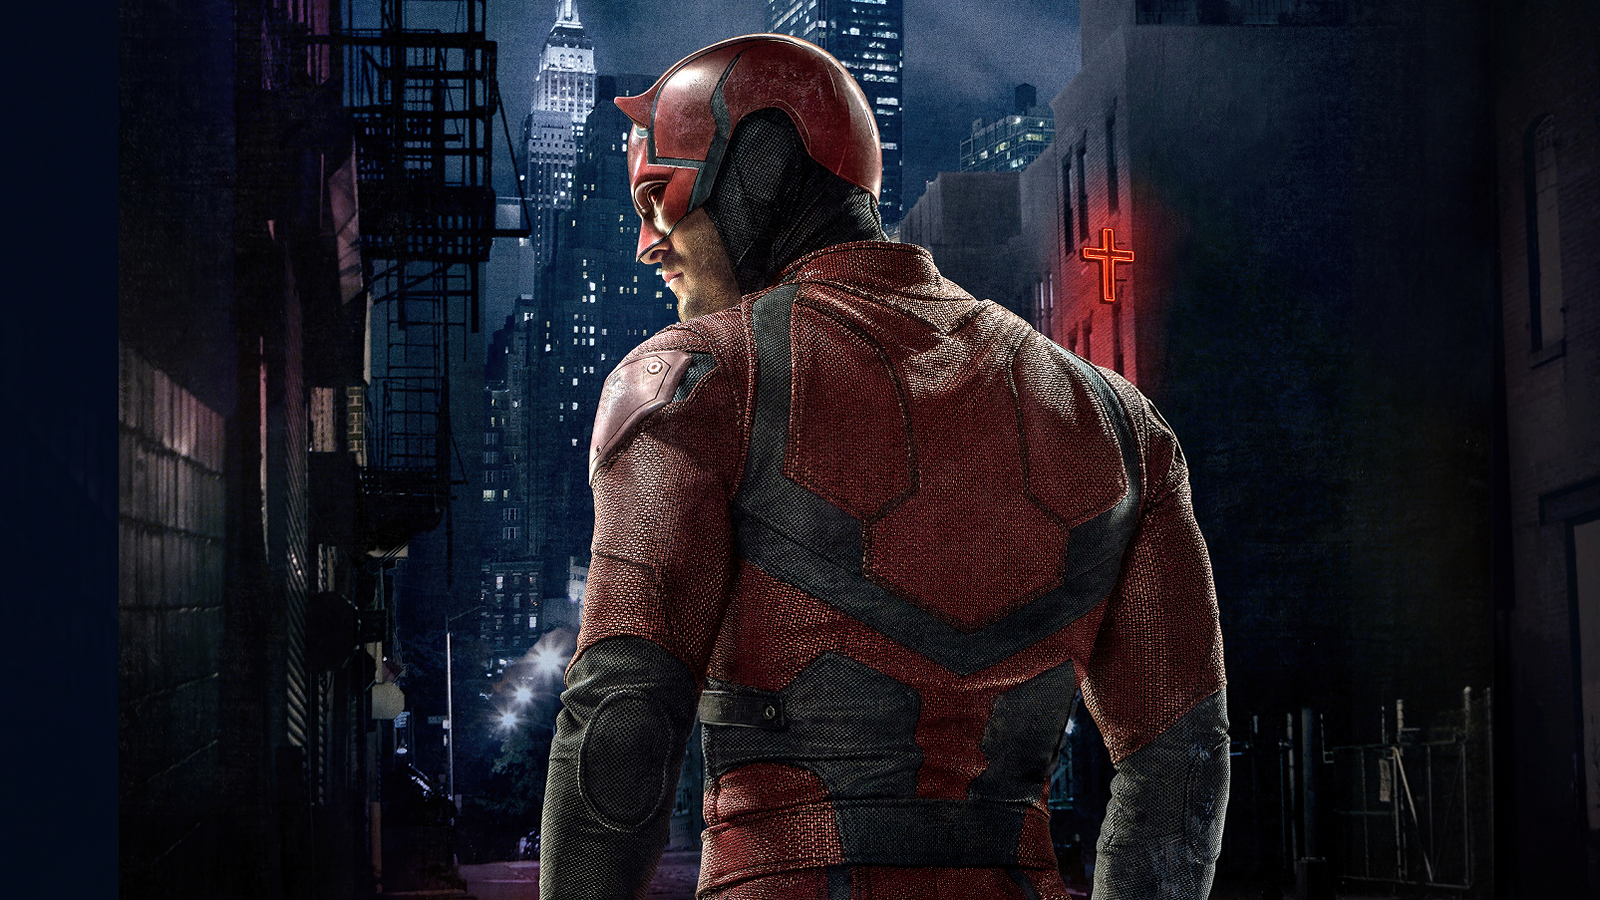 Charlie Cox as Matt Murdock/Daredevil in key art for Netflix's Daredevil Season 2